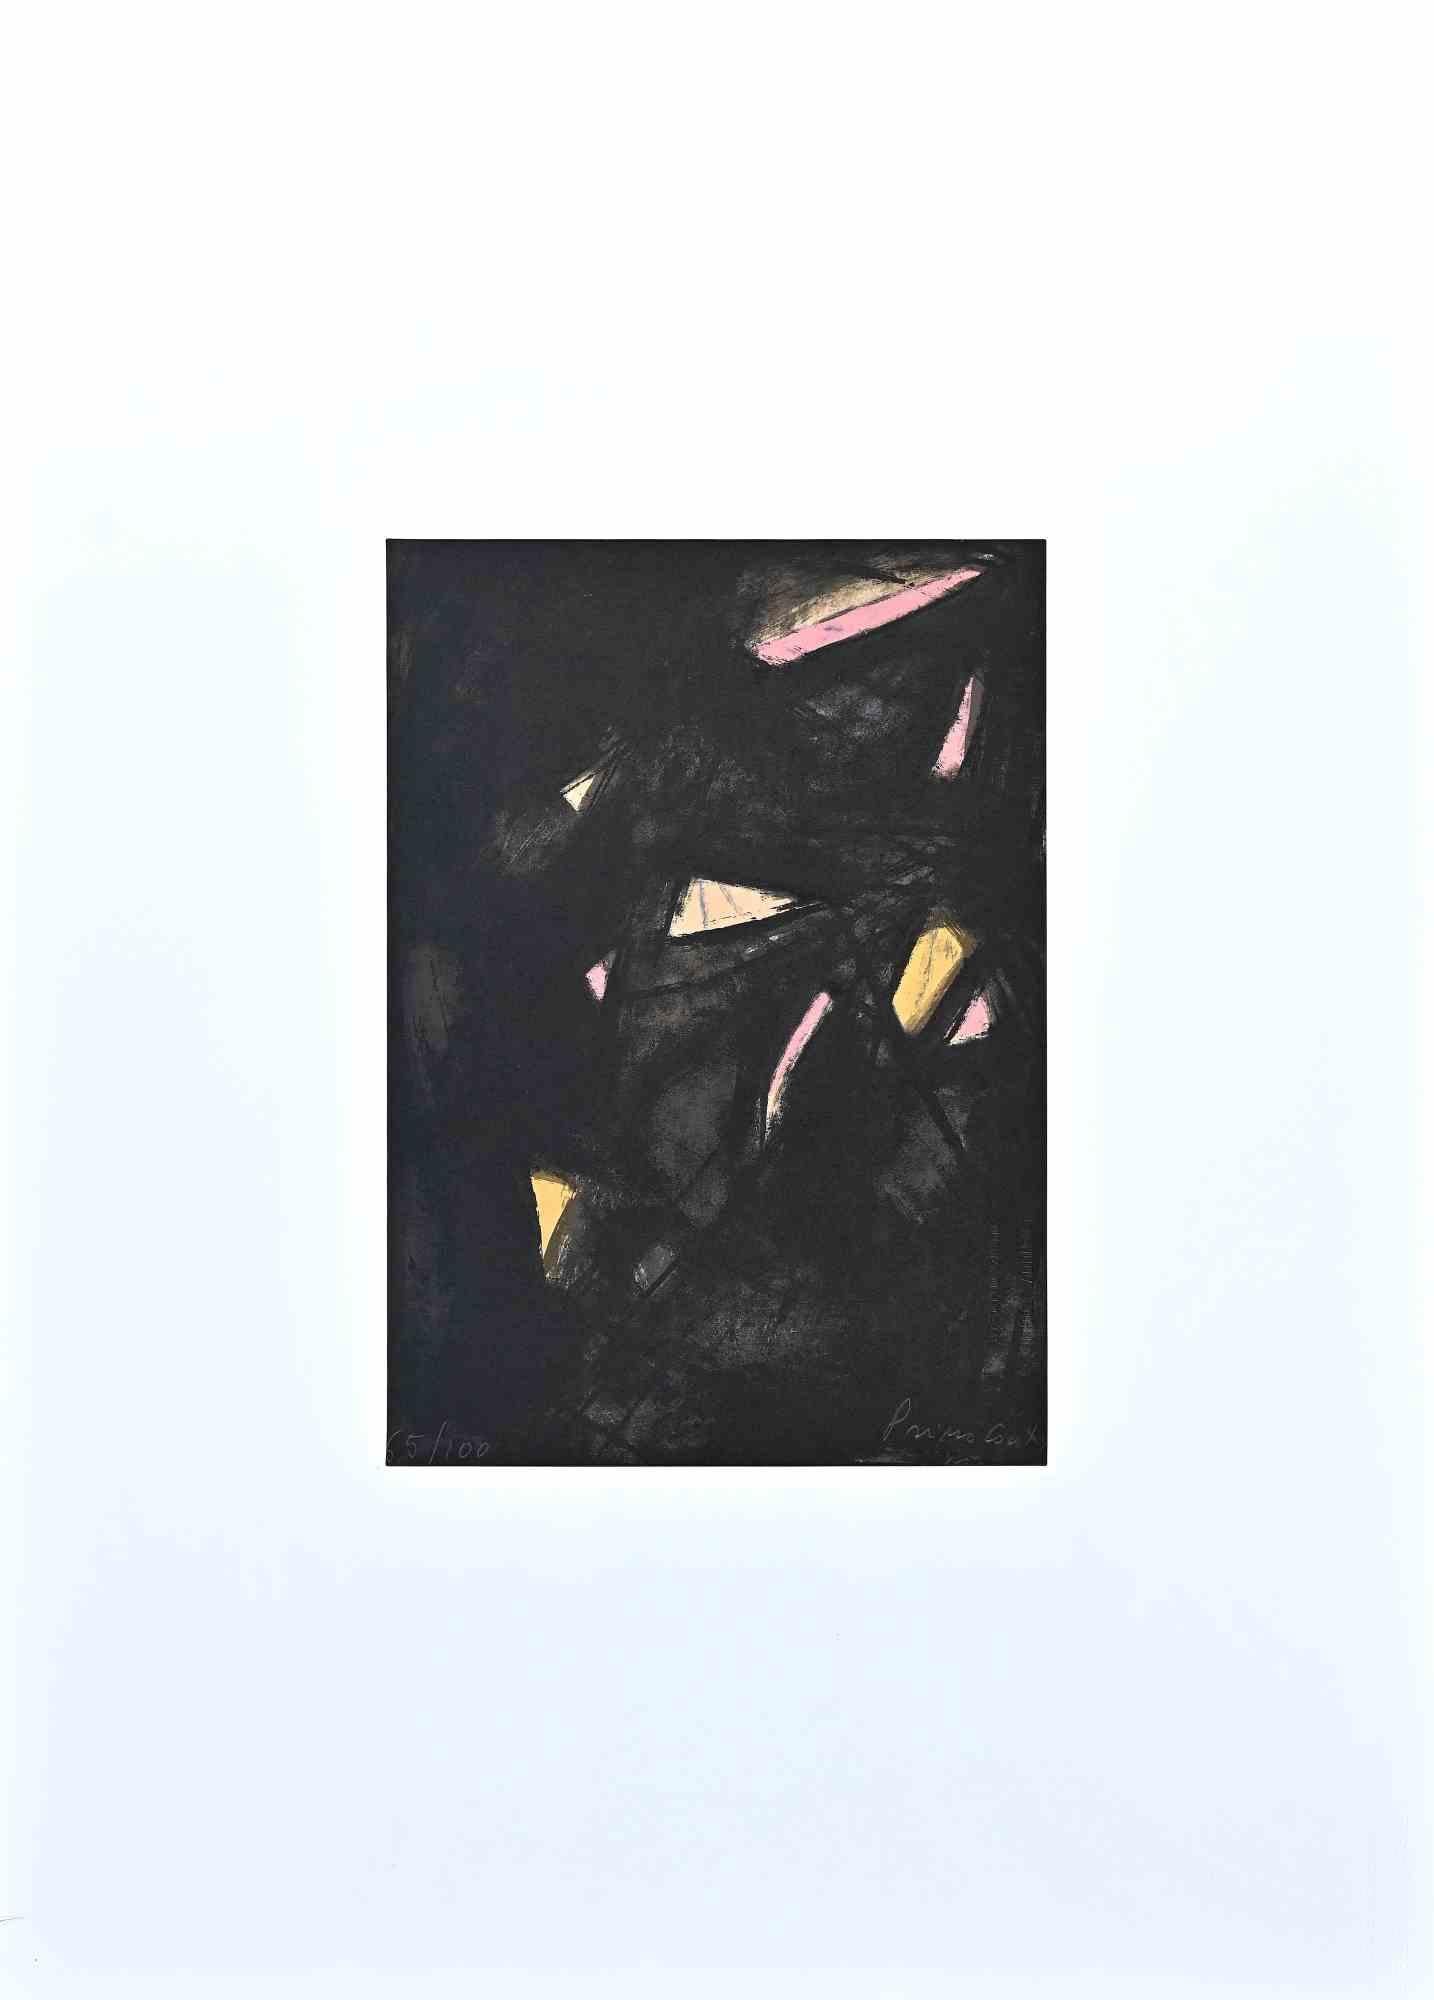 Primo Conti   Abstract Print - Abstract Composition - Original Lithograph by Primo Conti - 1971